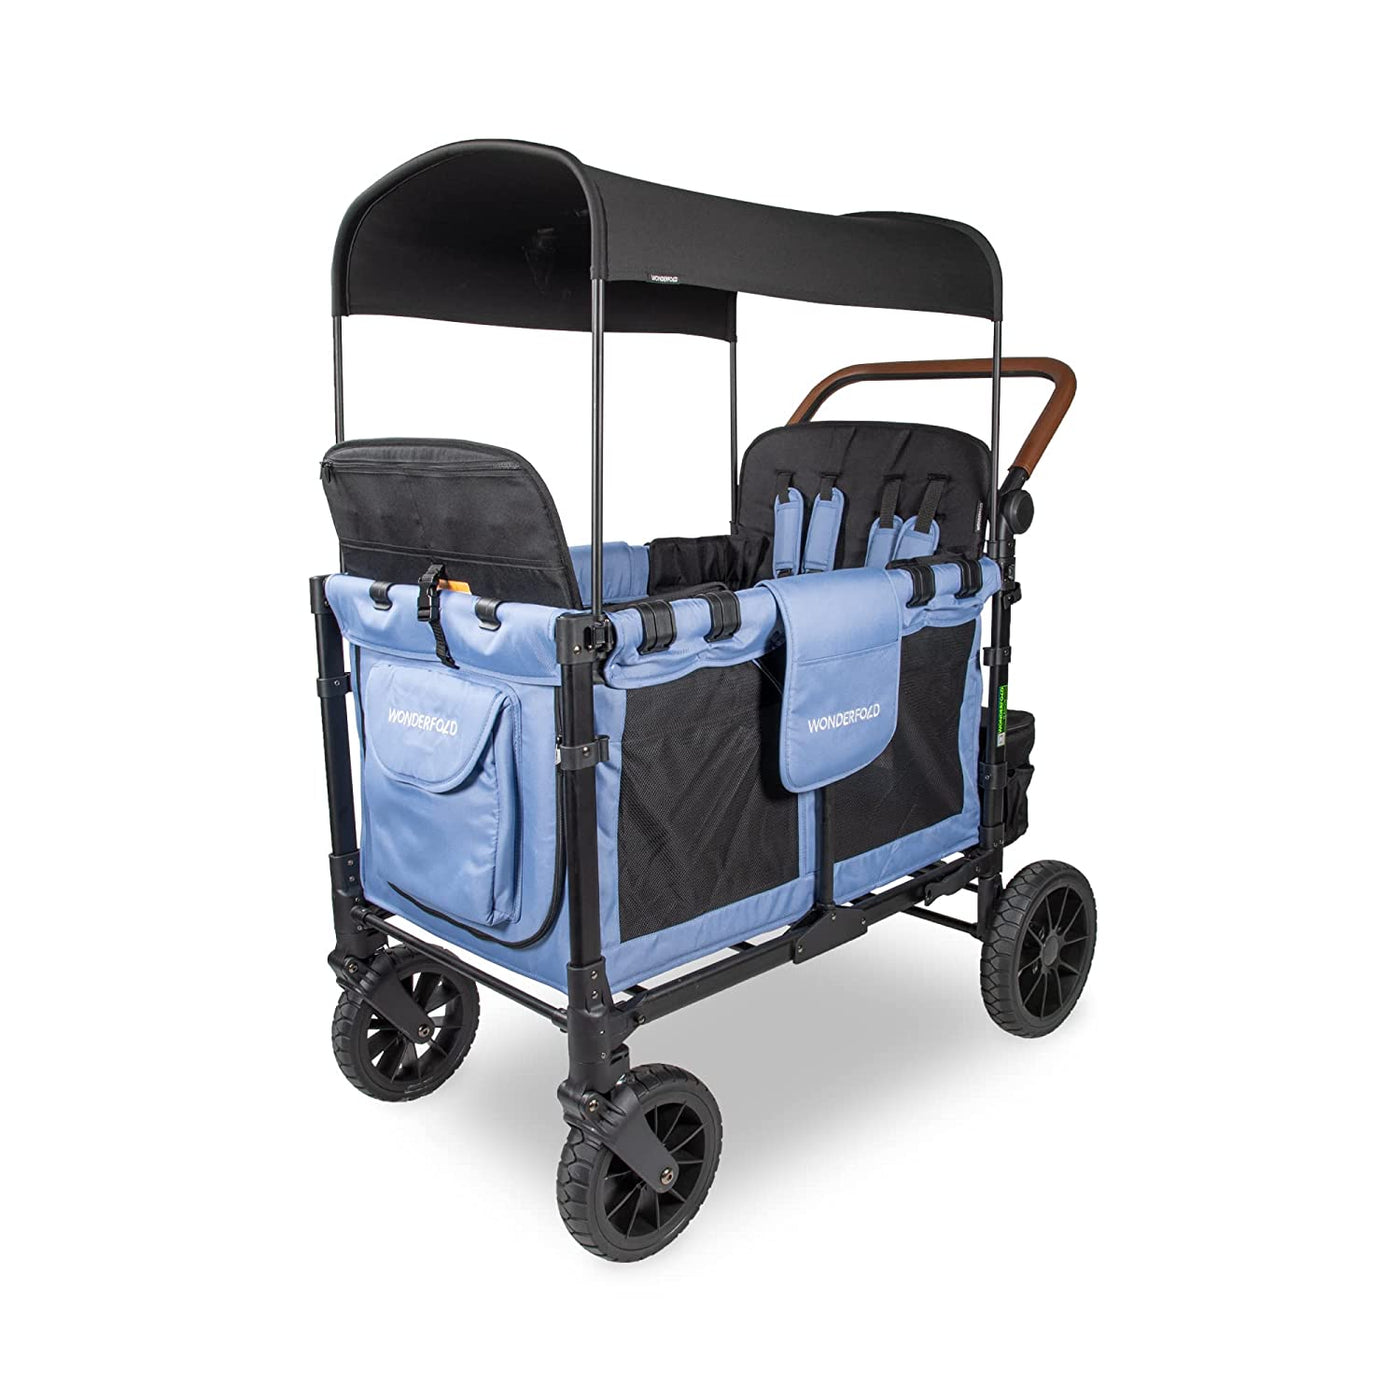 Wonderfold Wagon W4 Luxe Quad Stroller Wagon (4 Seater) - Storm Blue